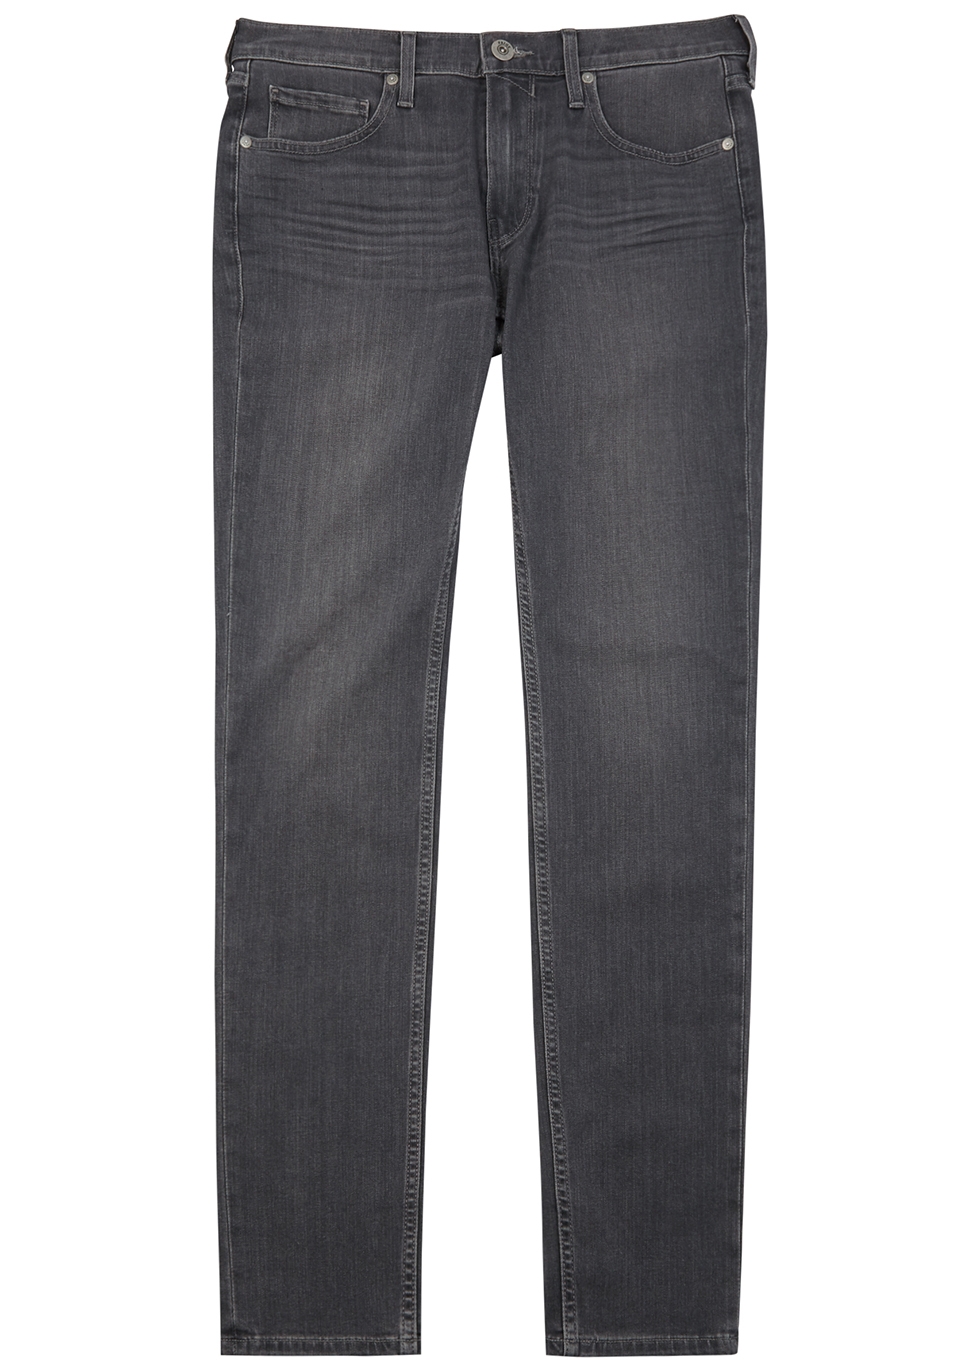 Croft grey skinny jeans